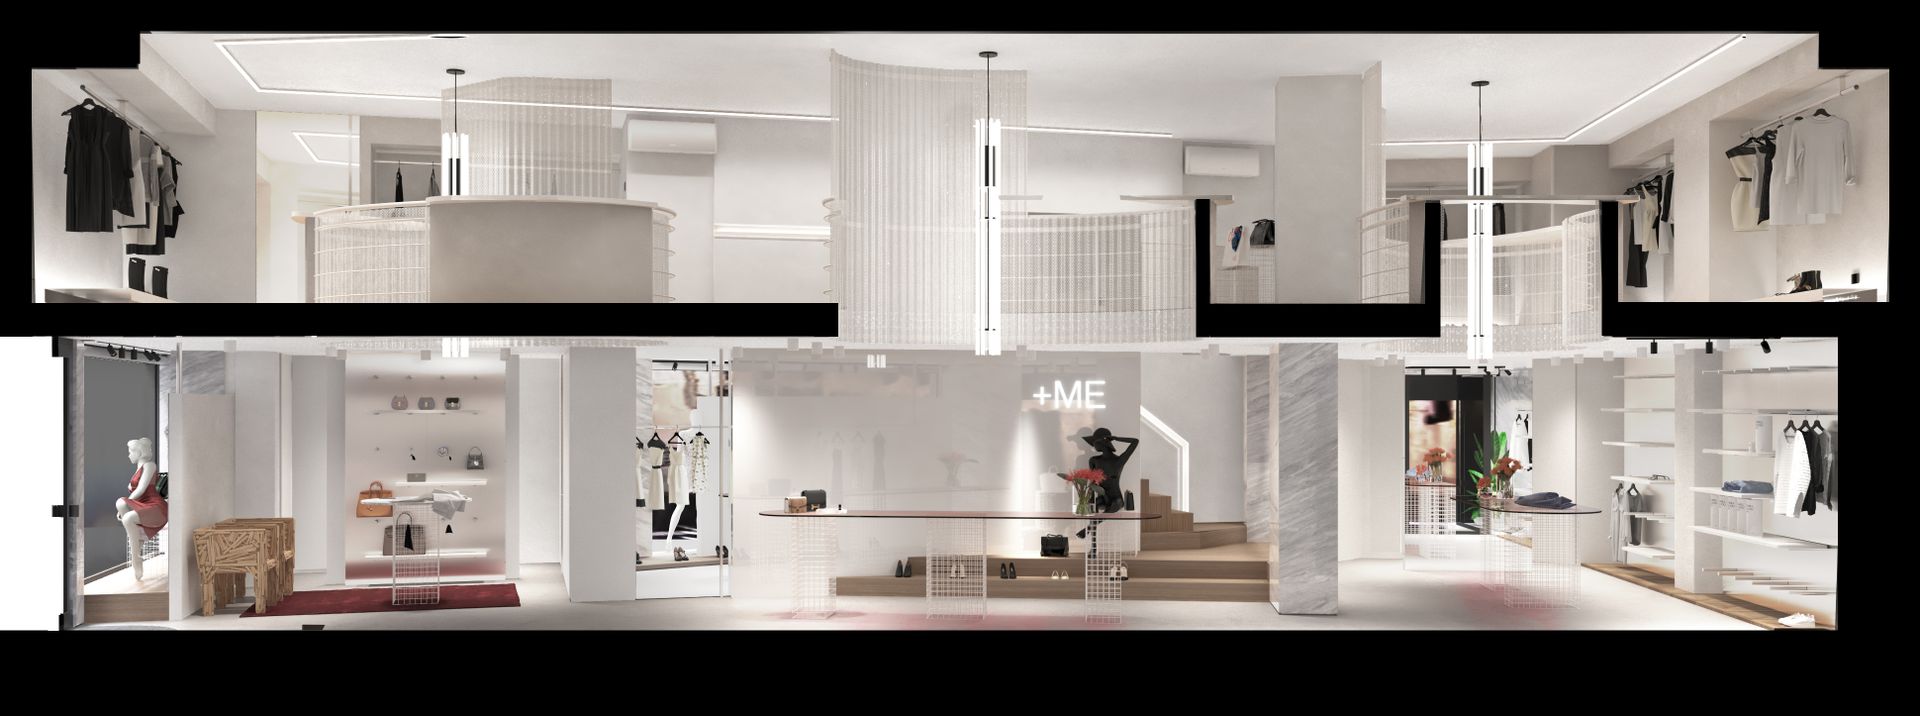 Interior design project, boutique remodeling and rebranding luxury fashion clothing Bergamo, Milan, Lake Como, London, New York, Paris. Officina Magisafi architecture design - section render